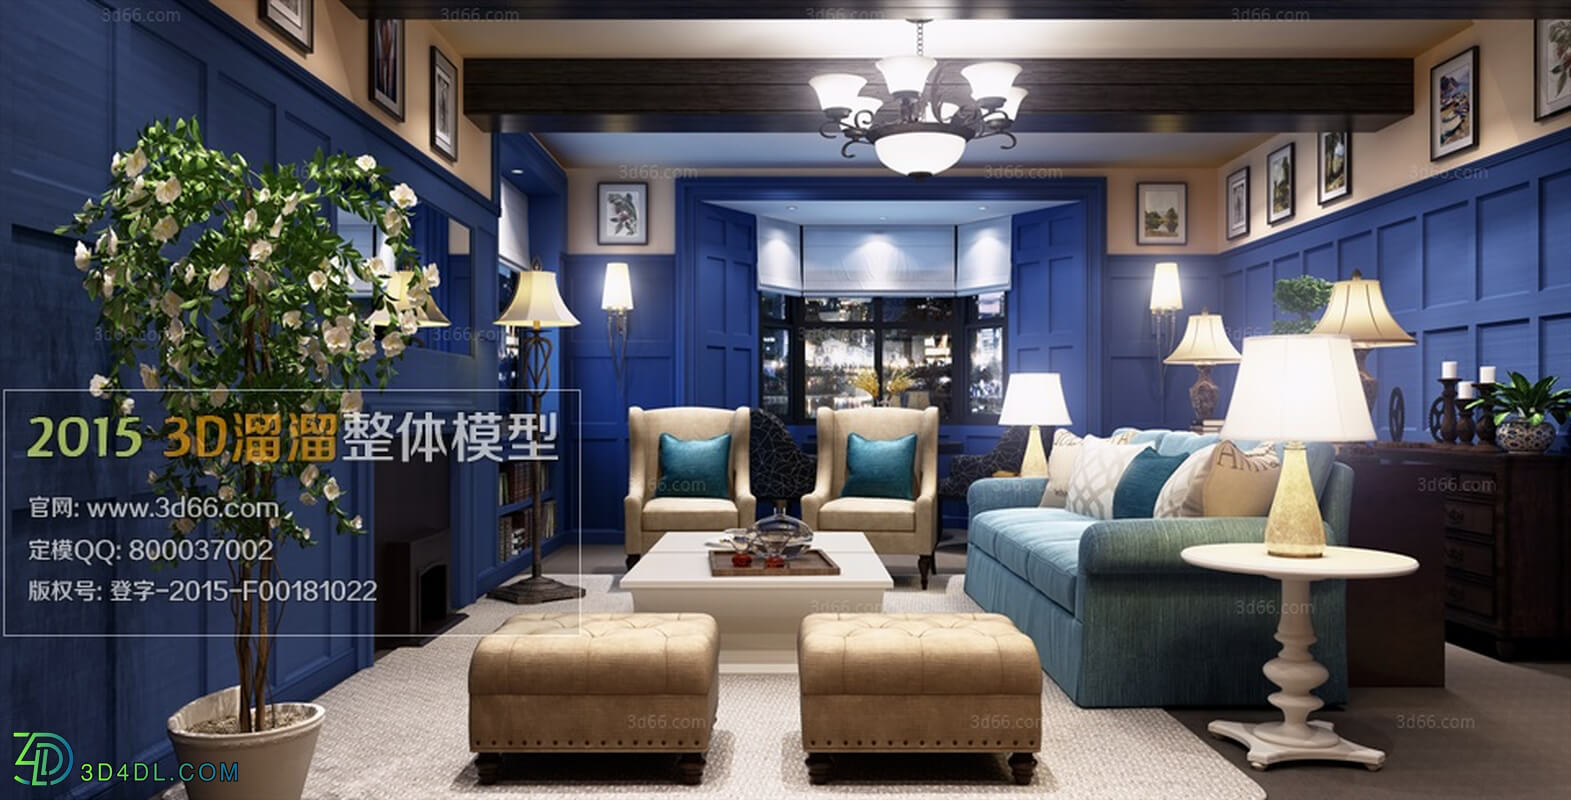 3D66 American Style Livingroom 2015 (266)